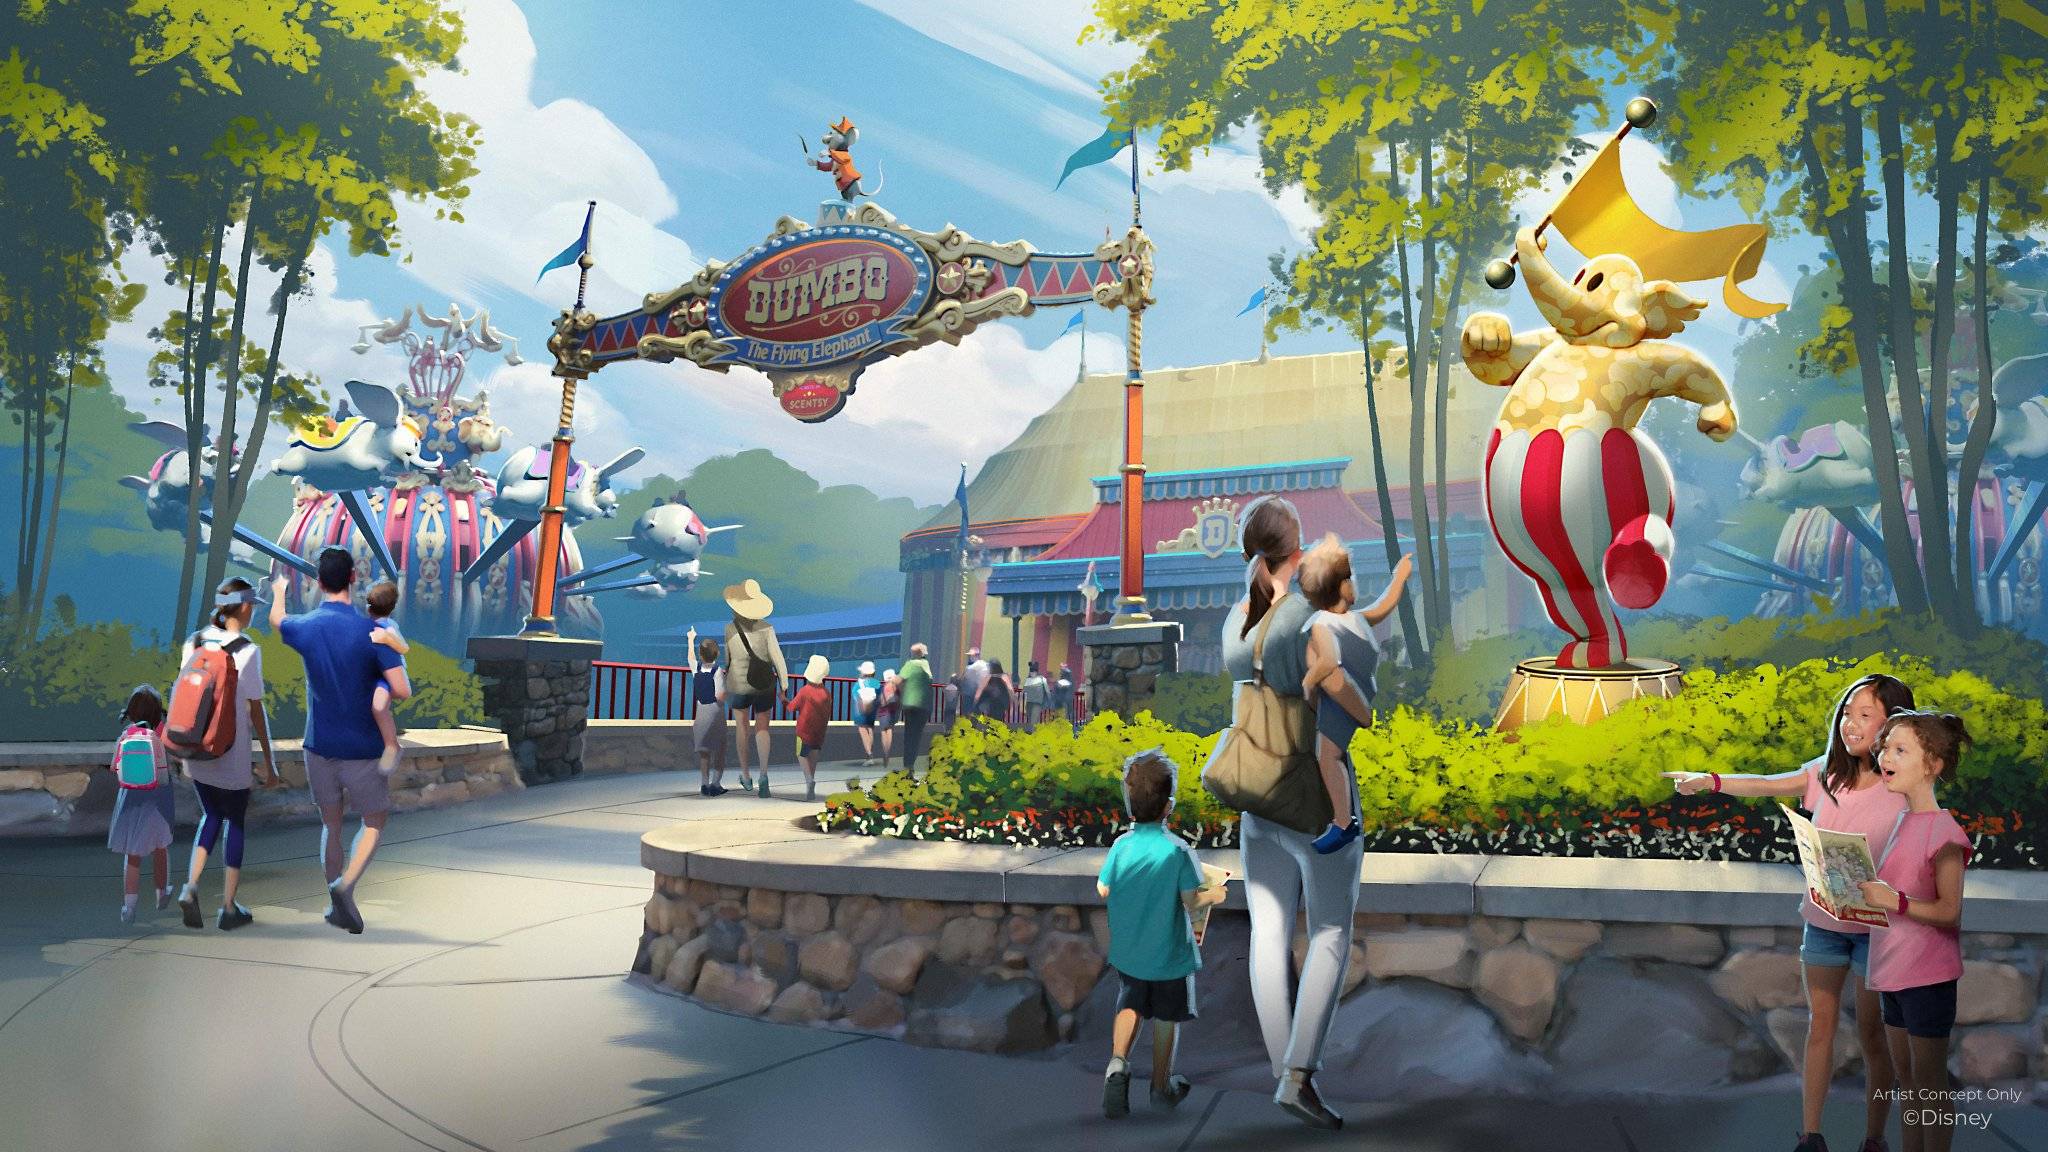 More details on 'Smellephants on Parade' coming to Fantasyland at Magic Kingdom